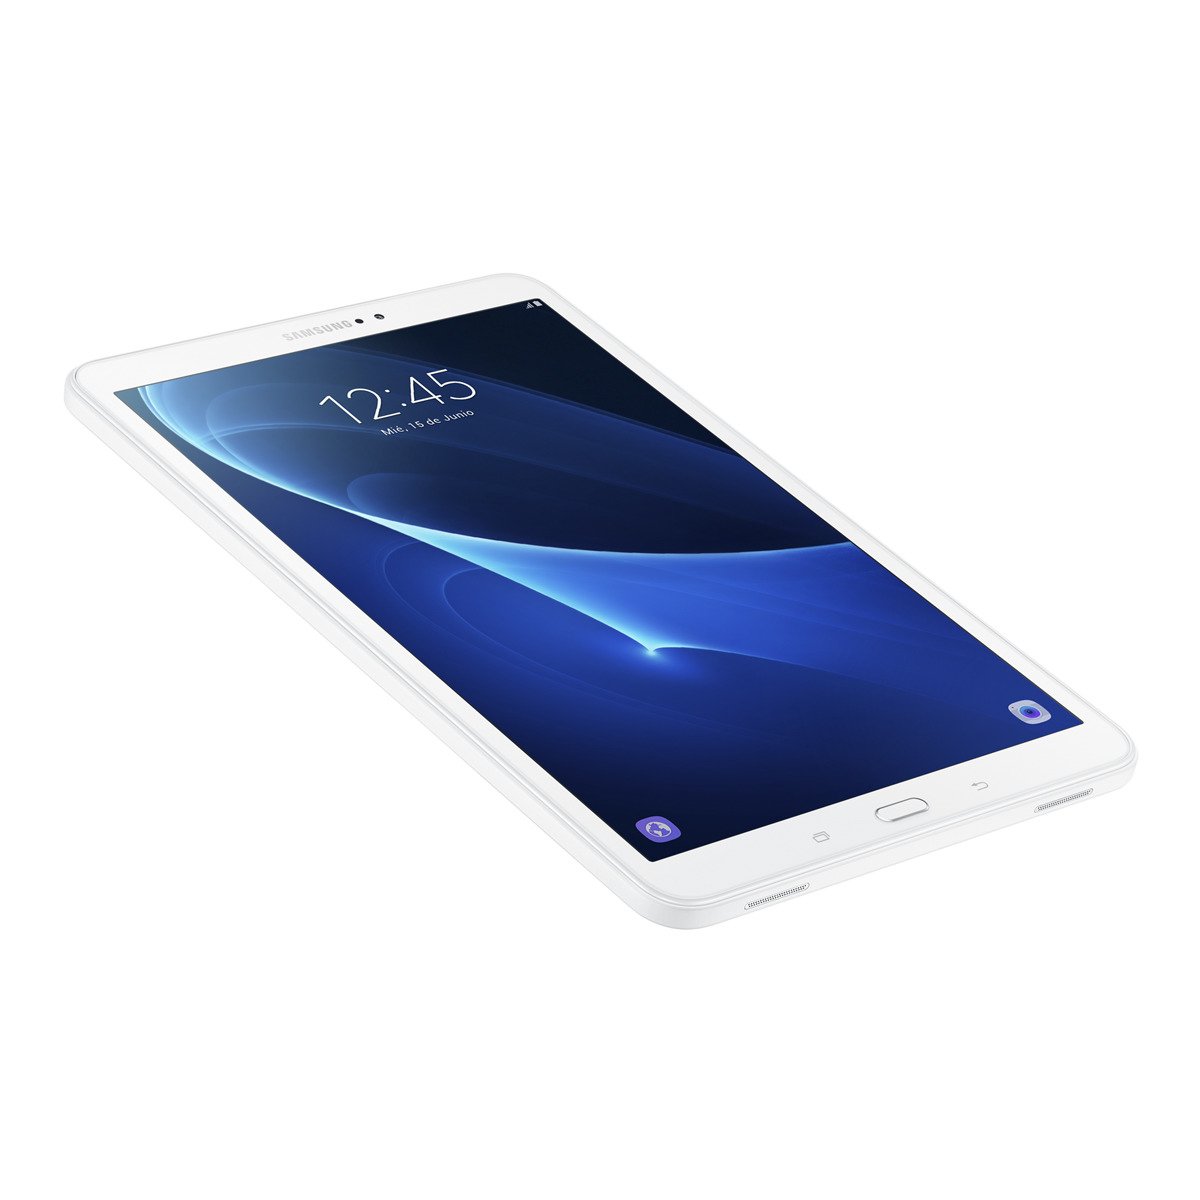 Samsung Galaxy Tab A T580 10.1" SM-T580NZWAXAR 16GB 8MP WiFi Tablet (White)